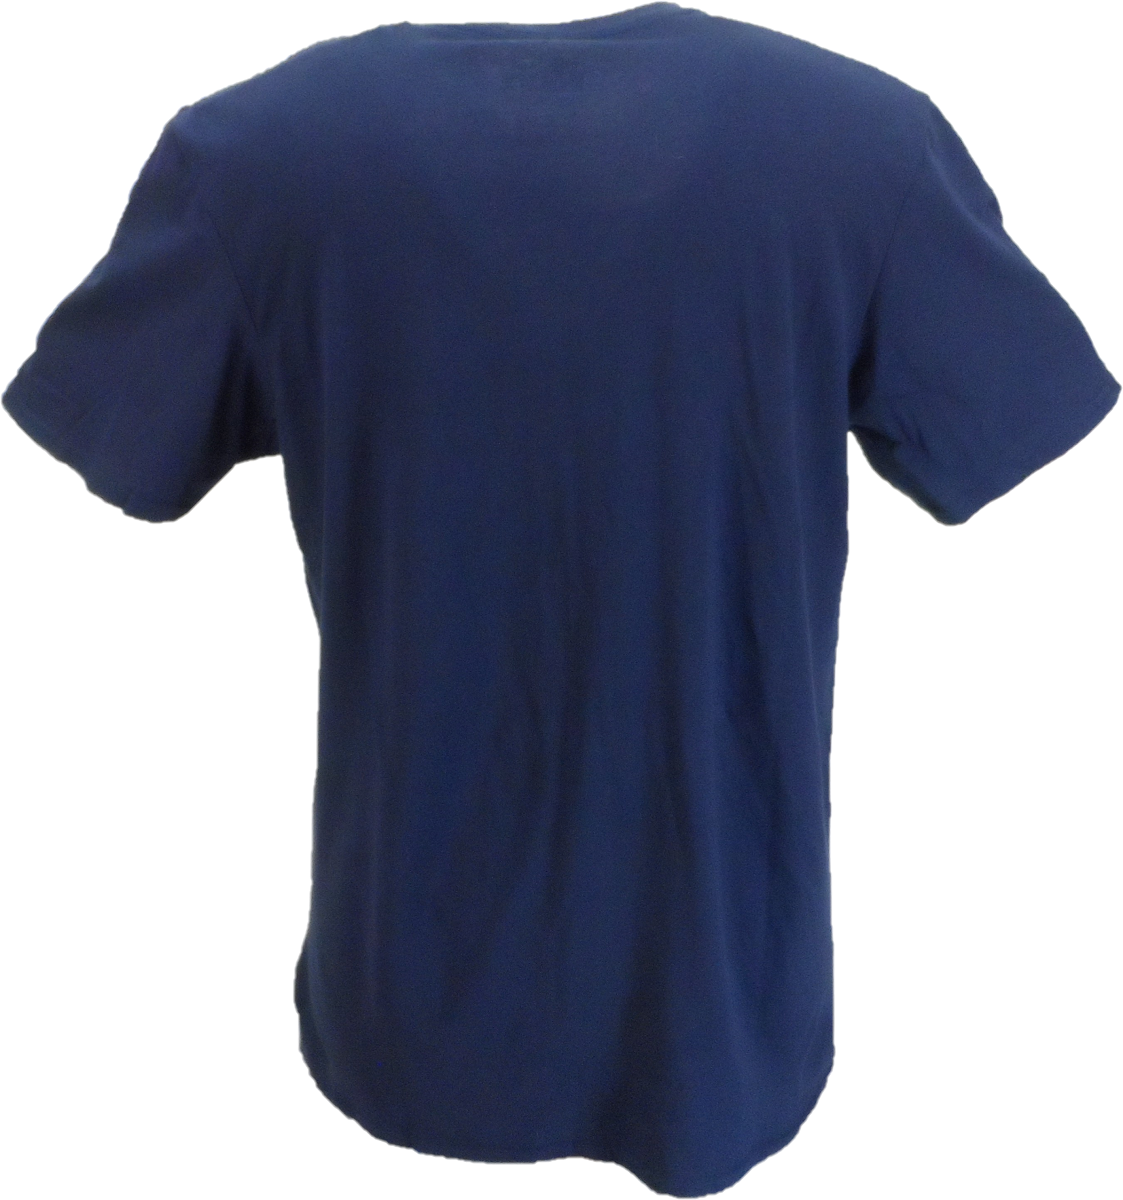 Oasis Blue Live Forever-T-Shirts für Herren Officially Licensed